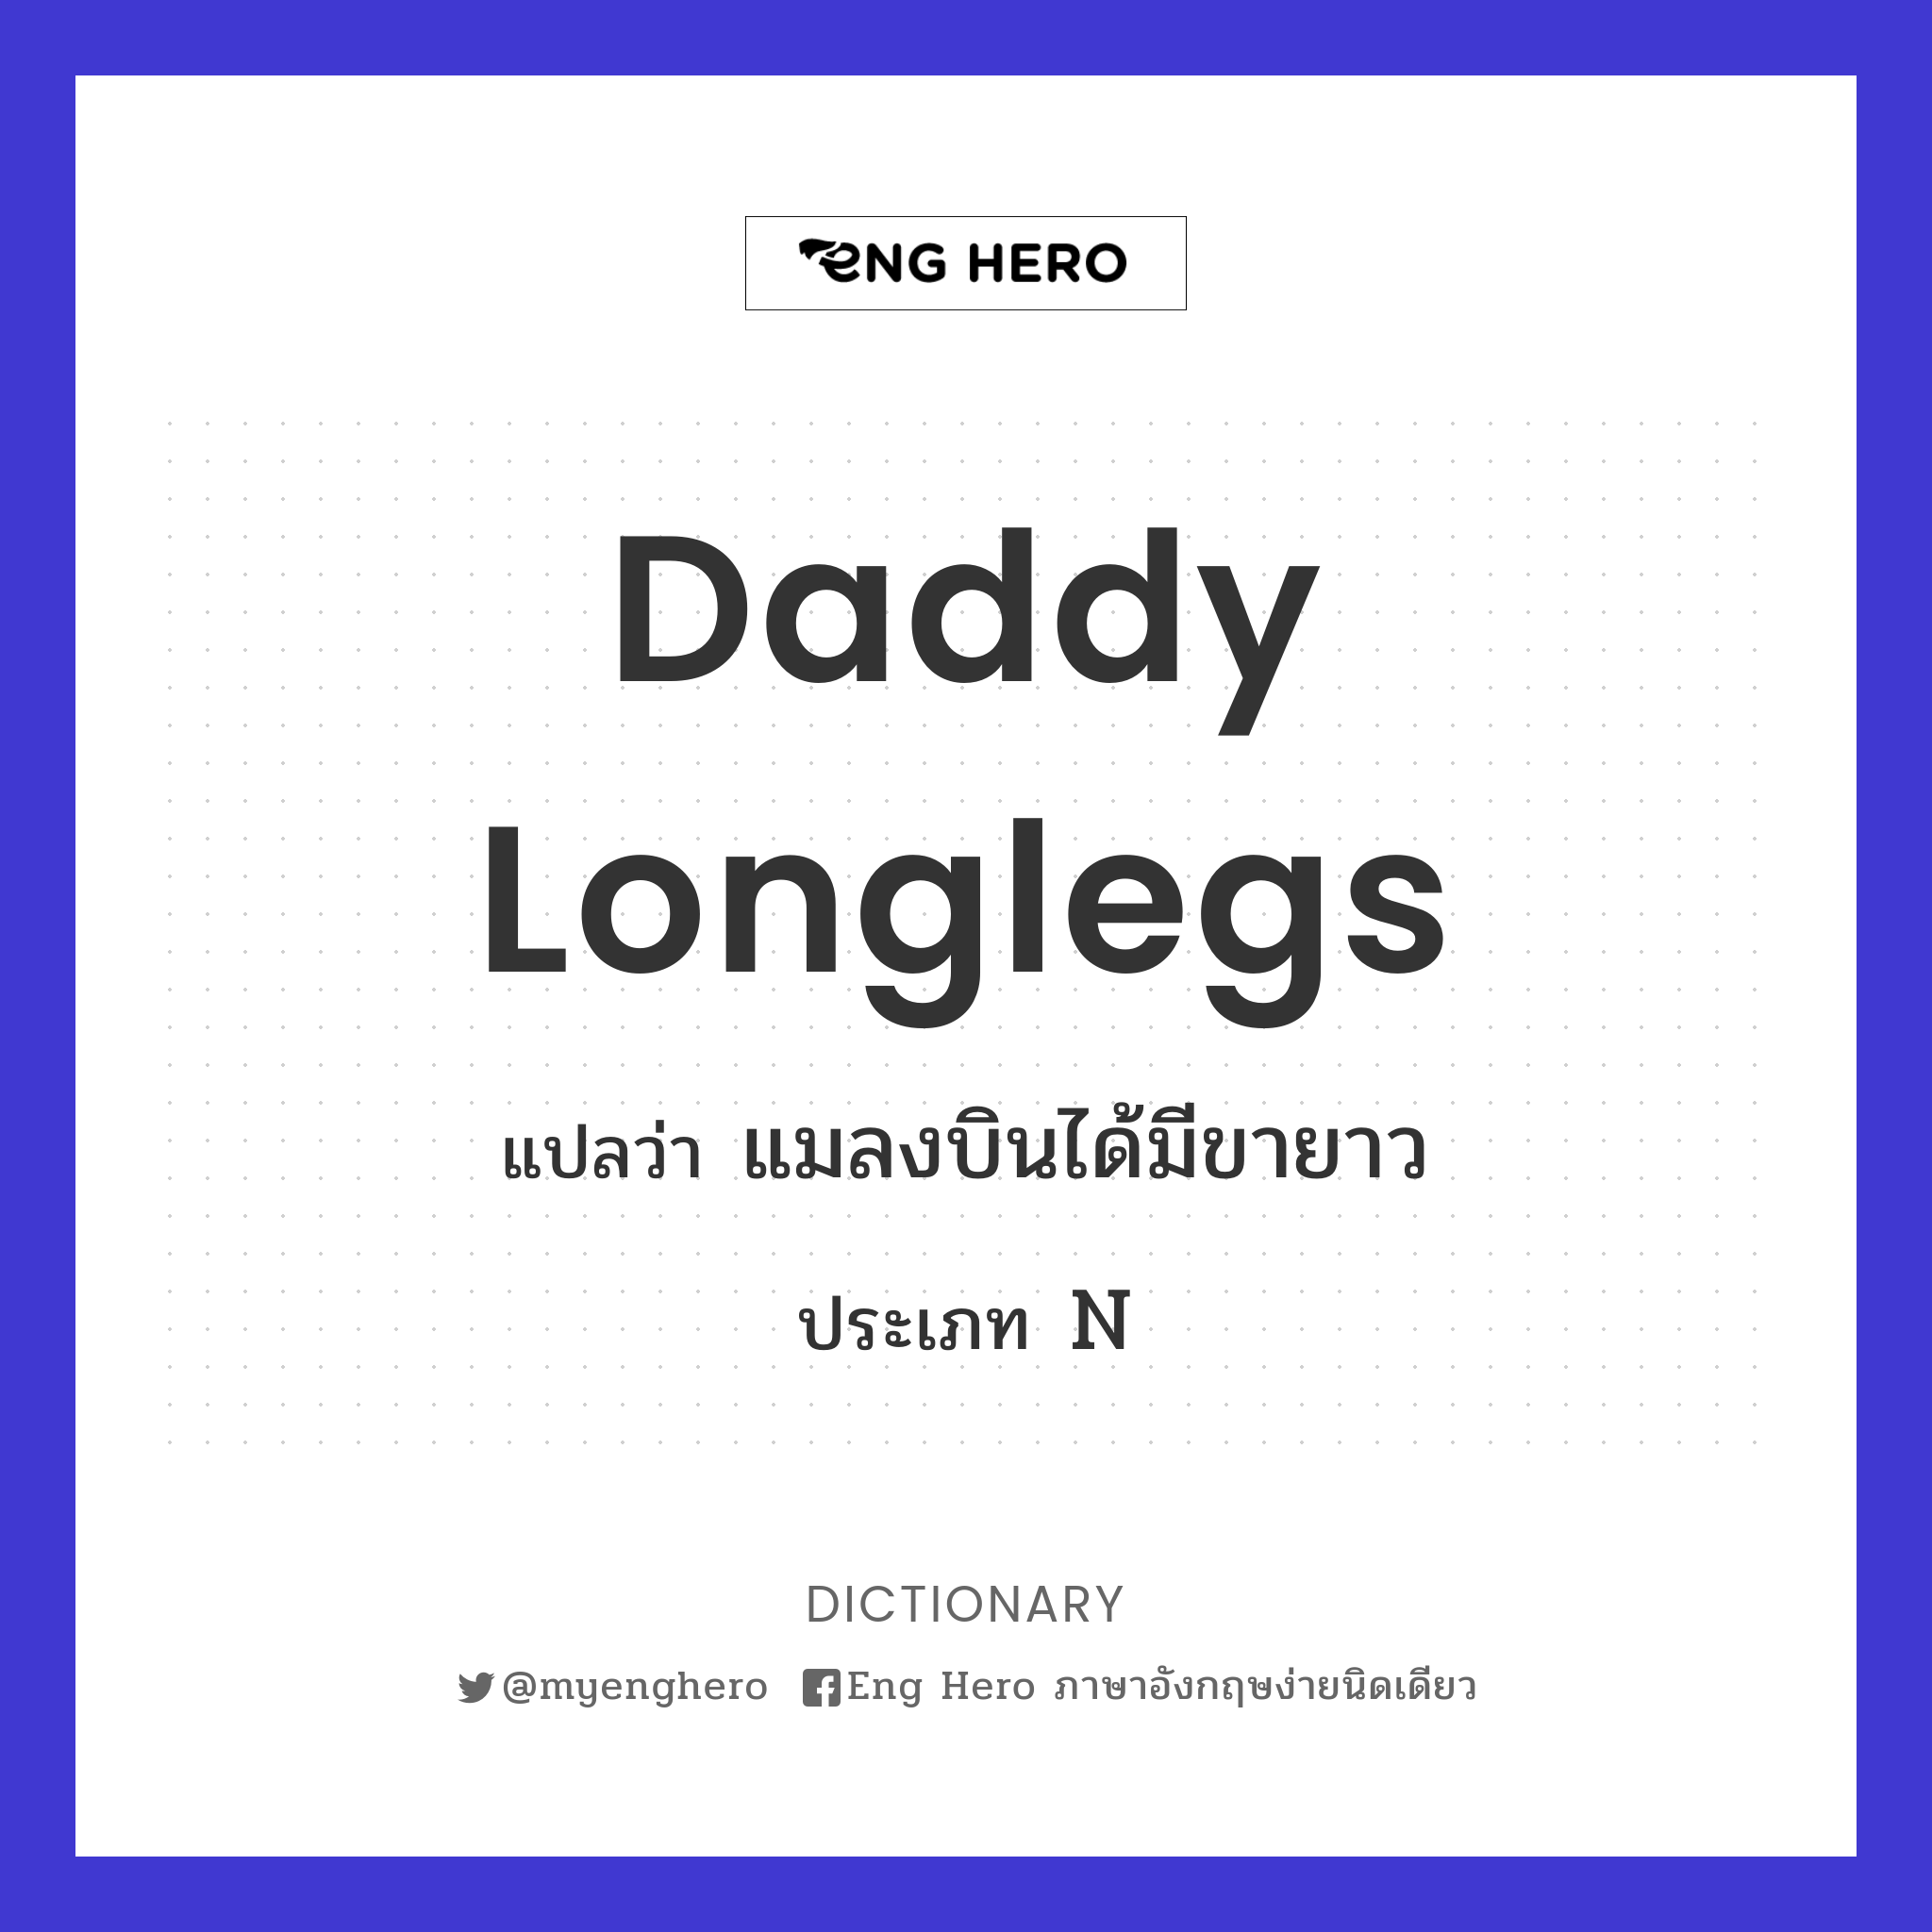 daddy longlegs